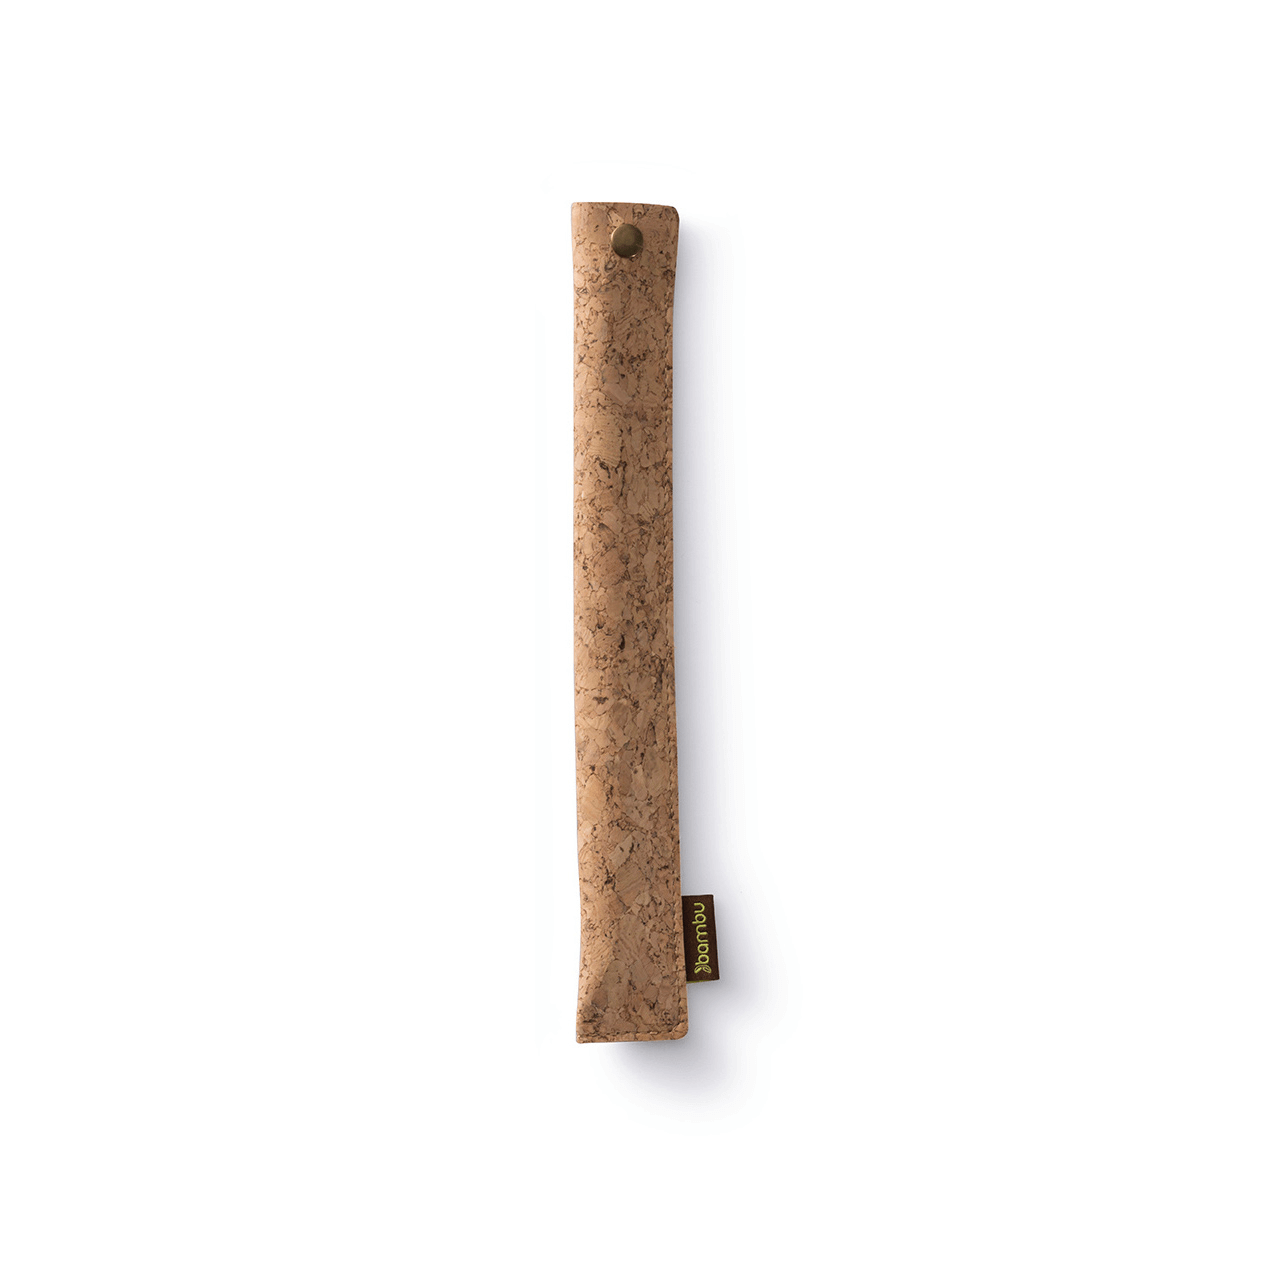 Cork Fabric Straw Sleeve, Packaging Free bambu®